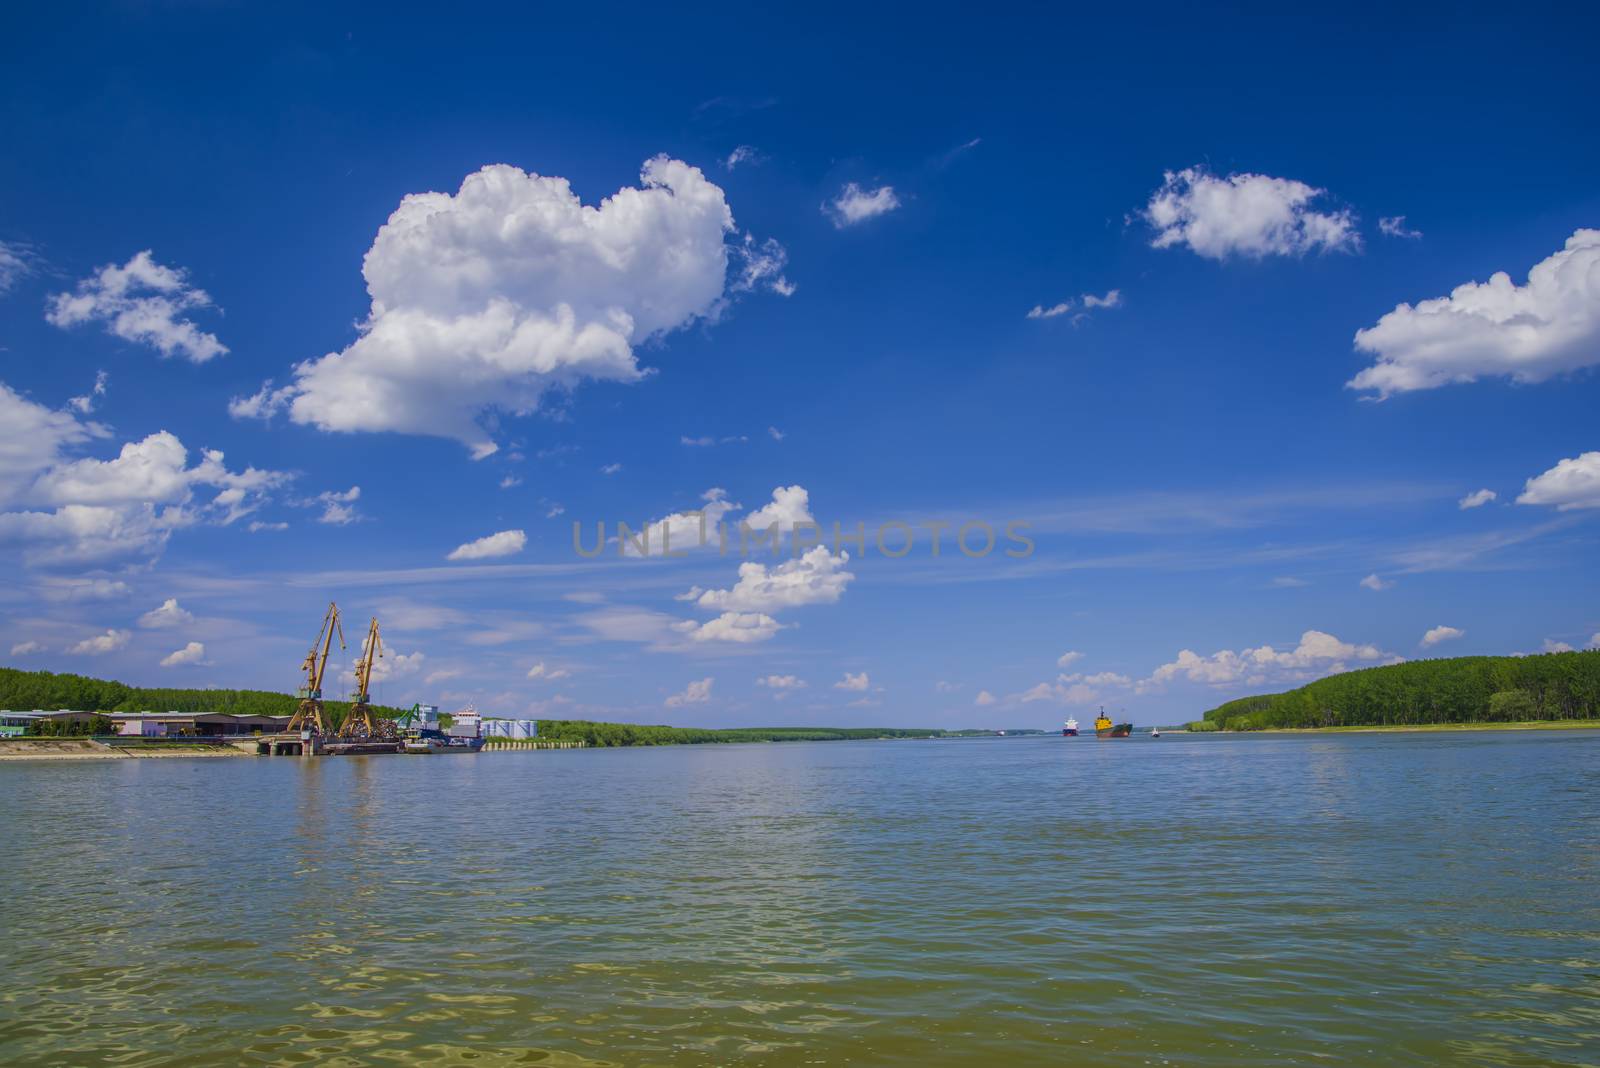 Danube river summer scene by savcoco